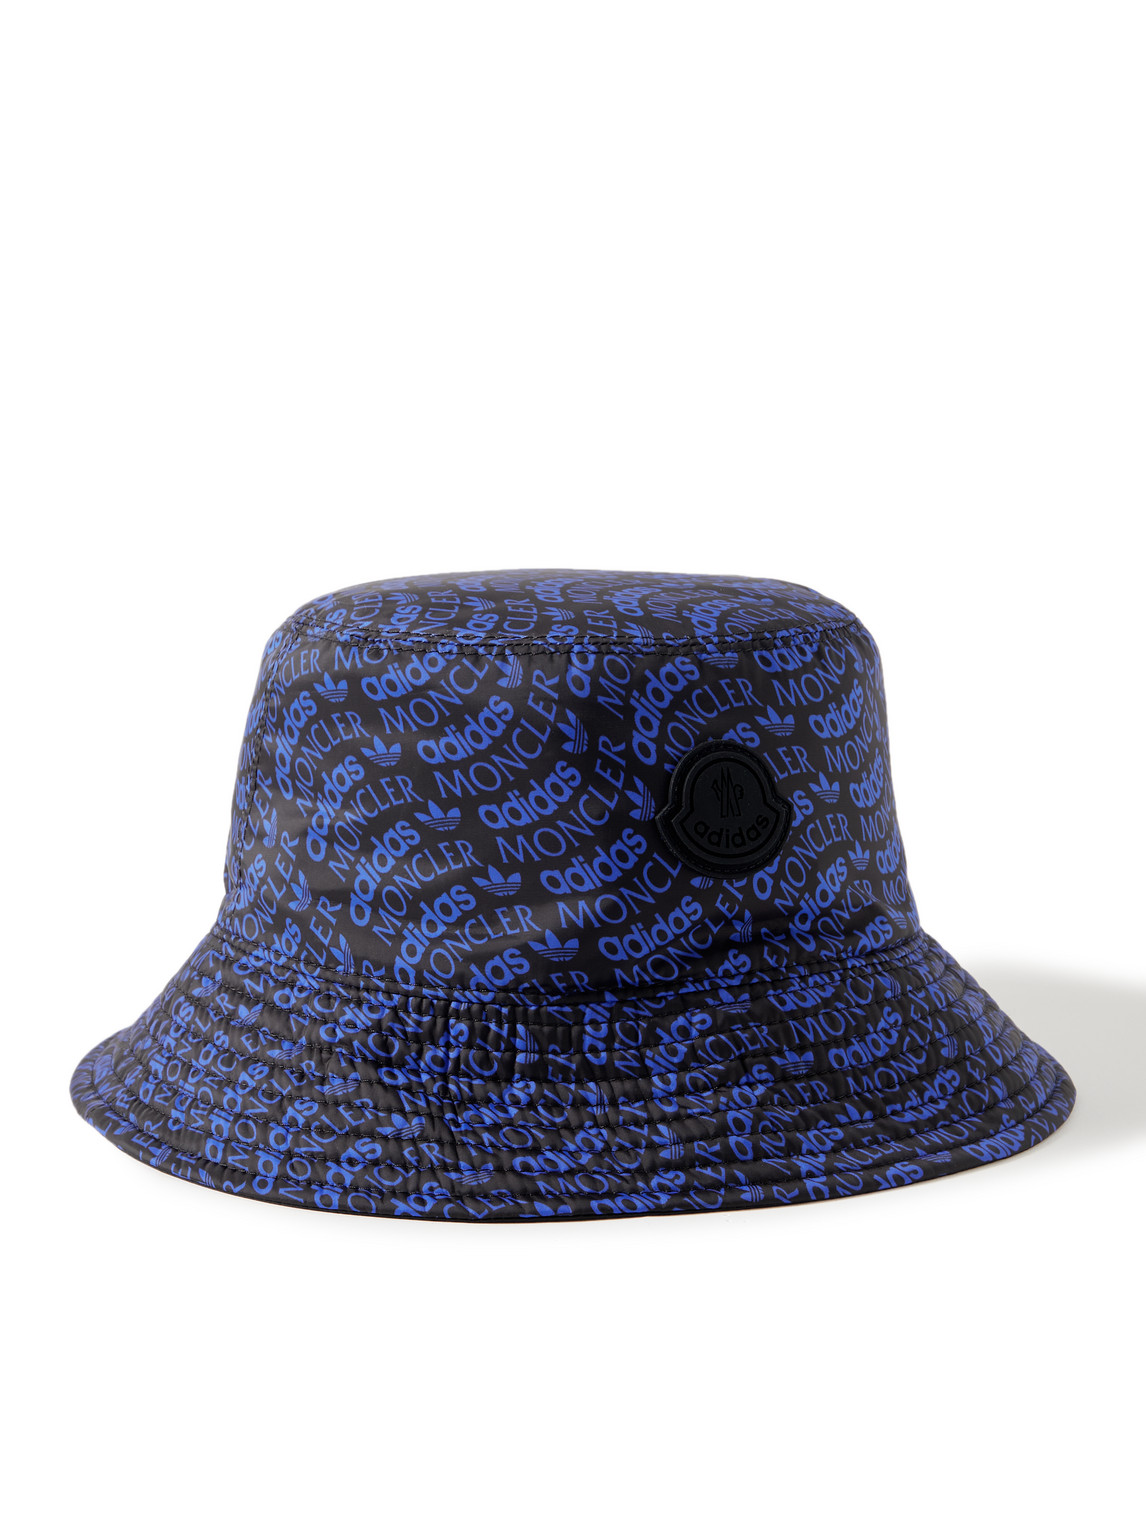 Moncler Genius Moncler X Adidas Tech Bucket Hat In Blue